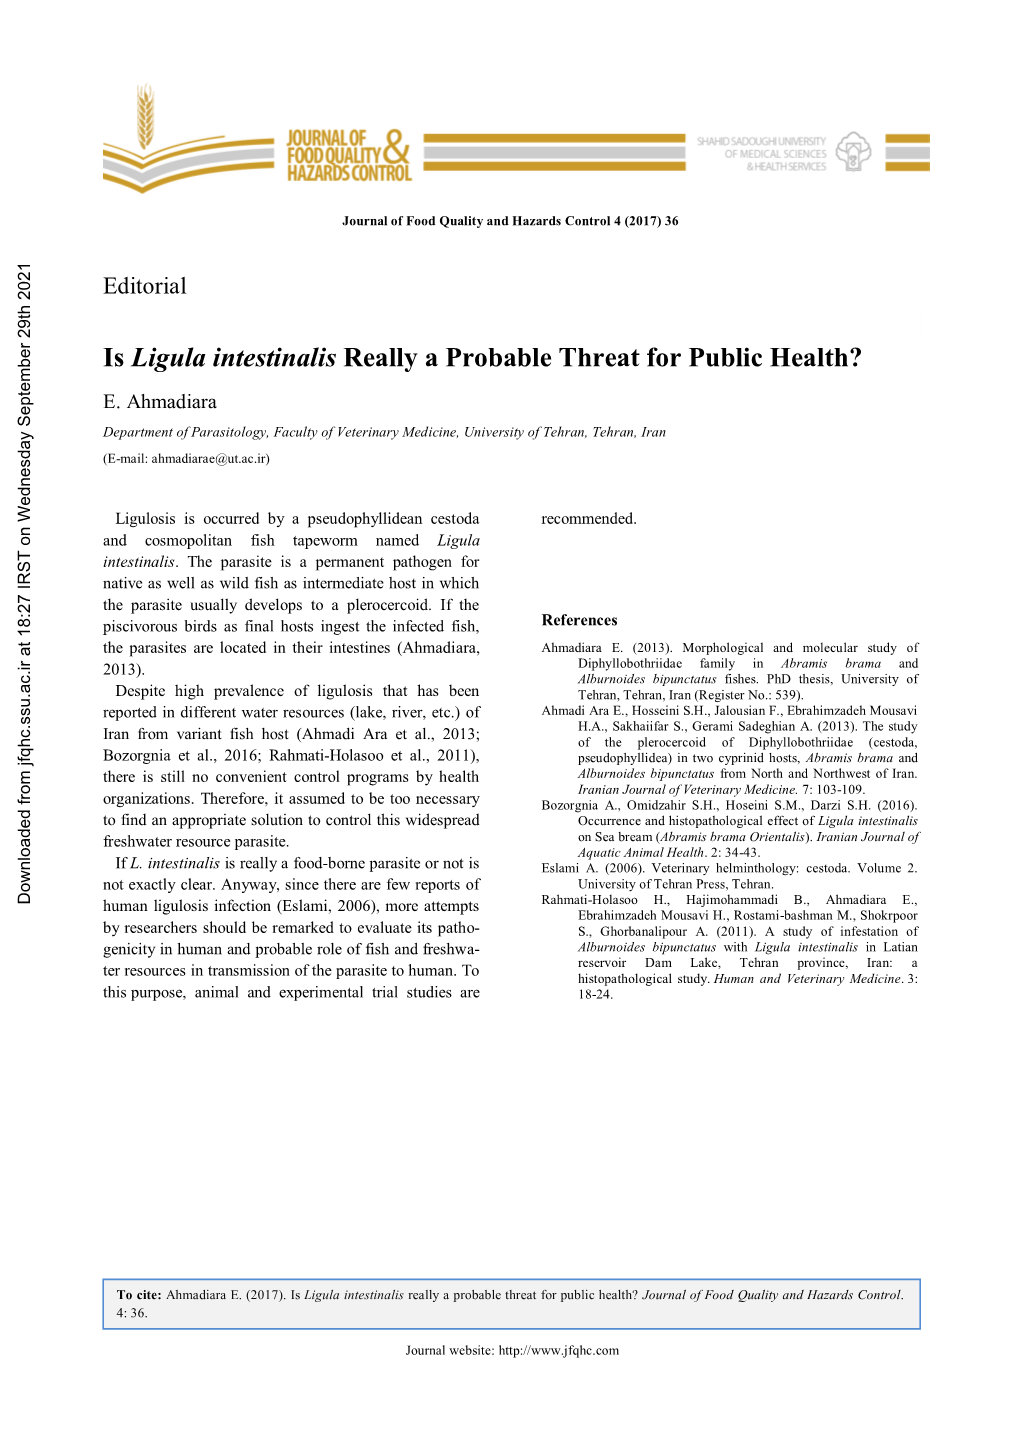 Is Ligula Intestinalis Really a Probable Threat for Public Health? E